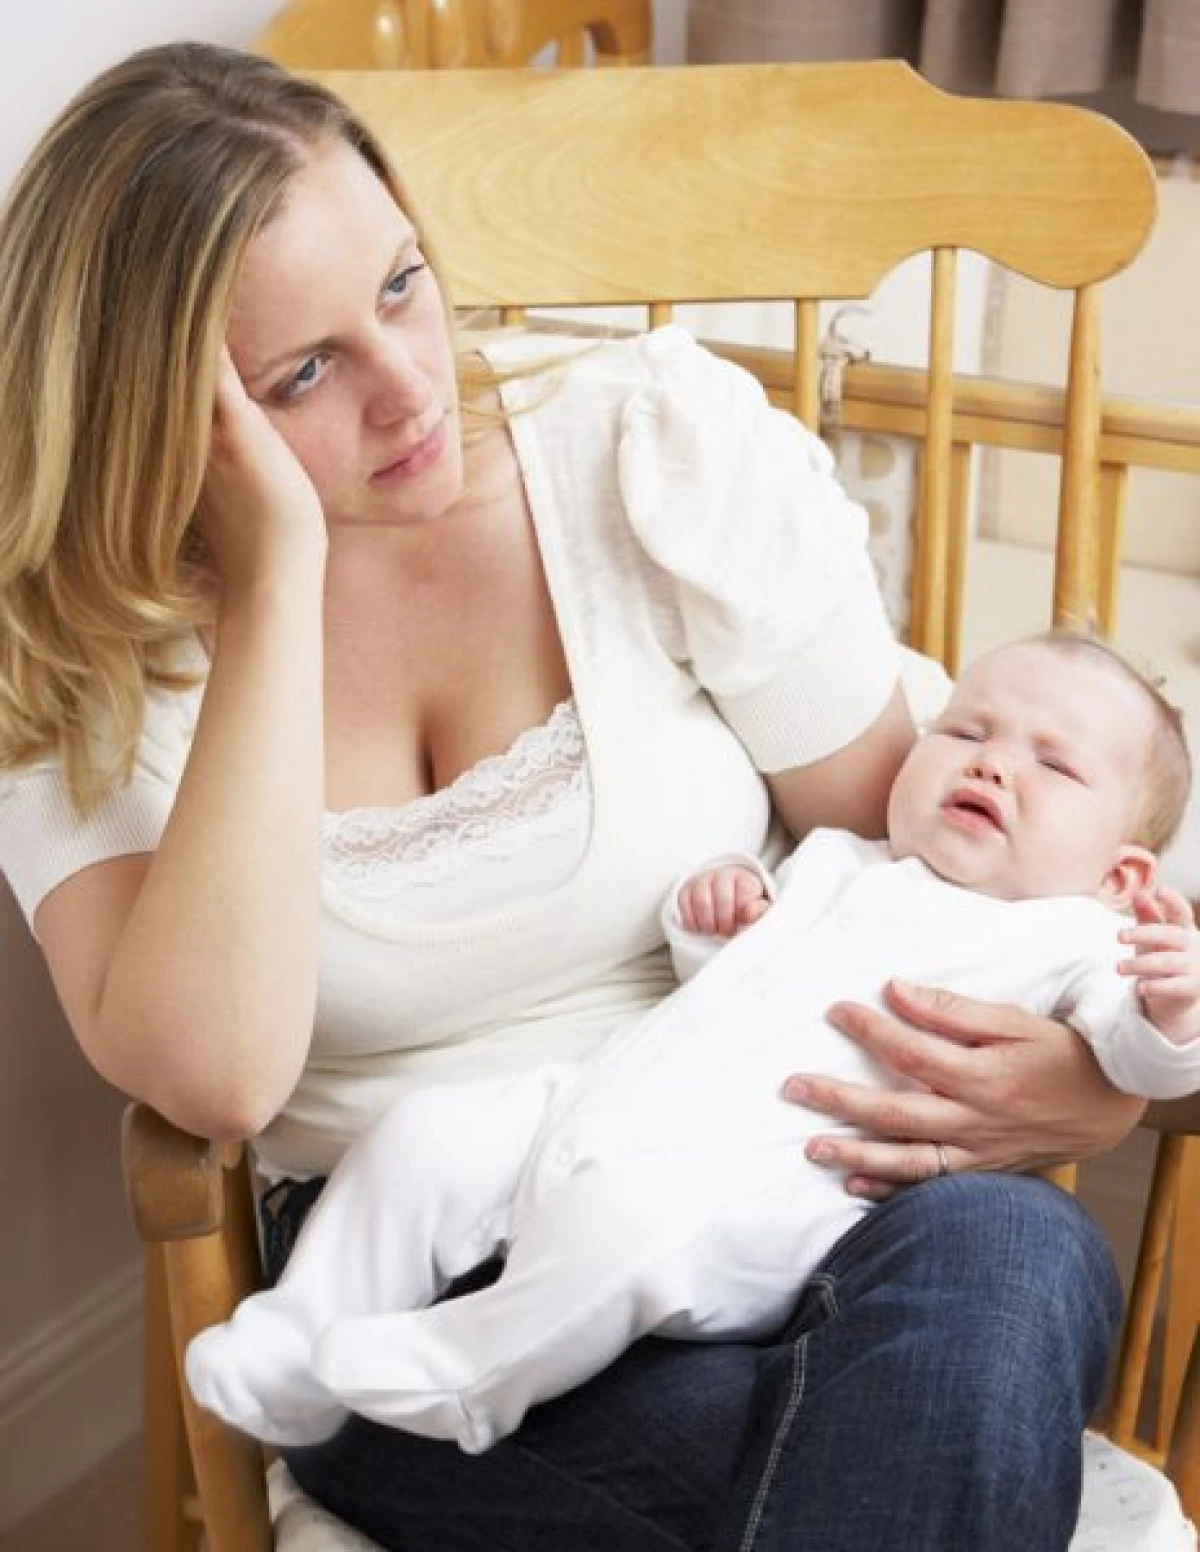 Postpartum စိတ်ကျရောဂါ - မိခင်တစ် ဦး ၏ကိုယ်ရေးကိုယ်တာအတွေ့အကြုံ 4204_5